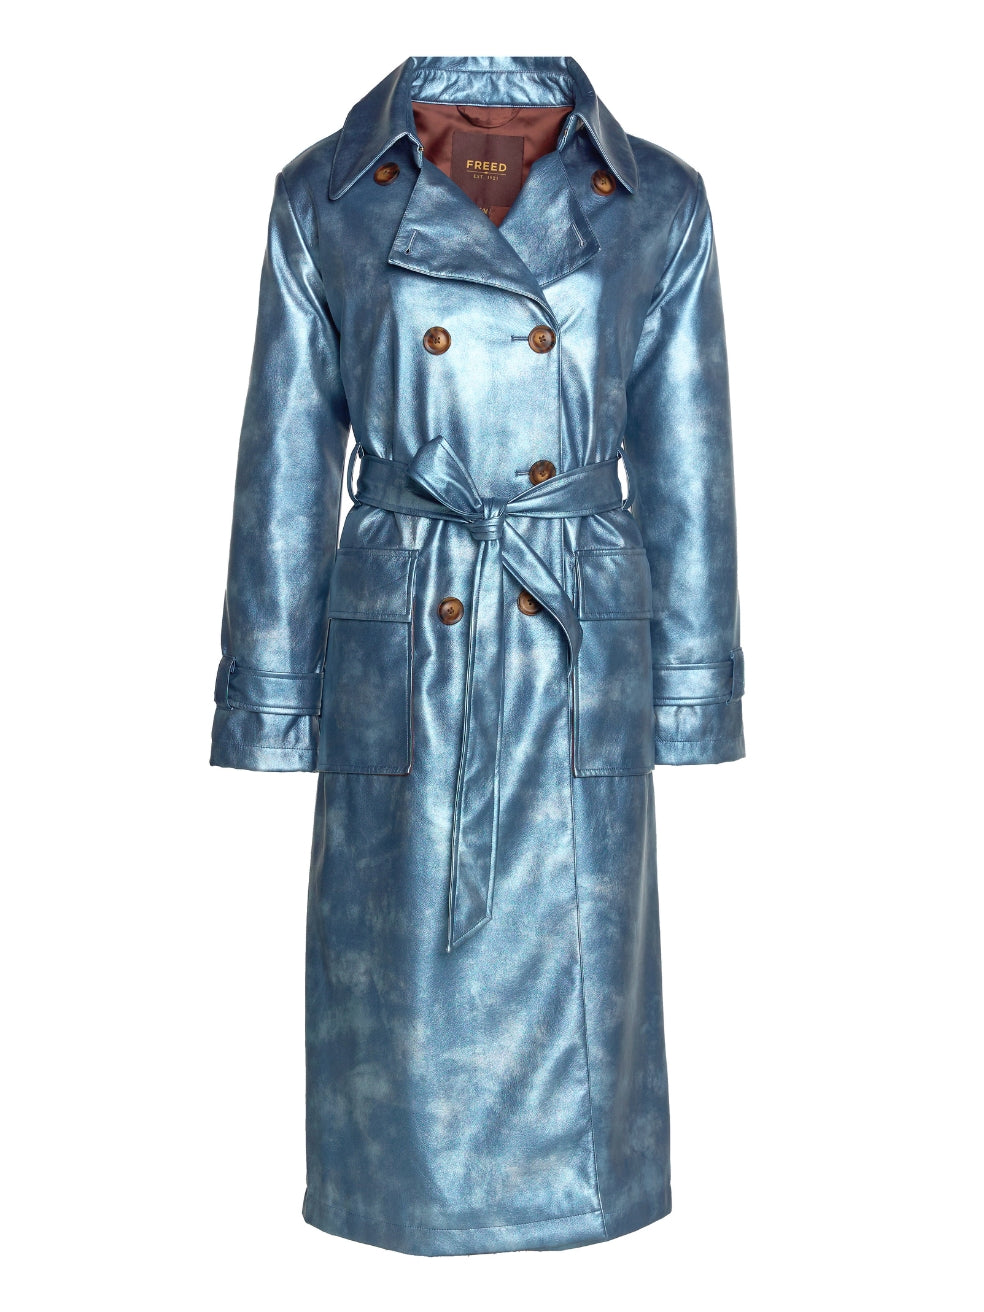 Gina trench coat long sustainable vegan leather outerwear luxury bombay blue metallic